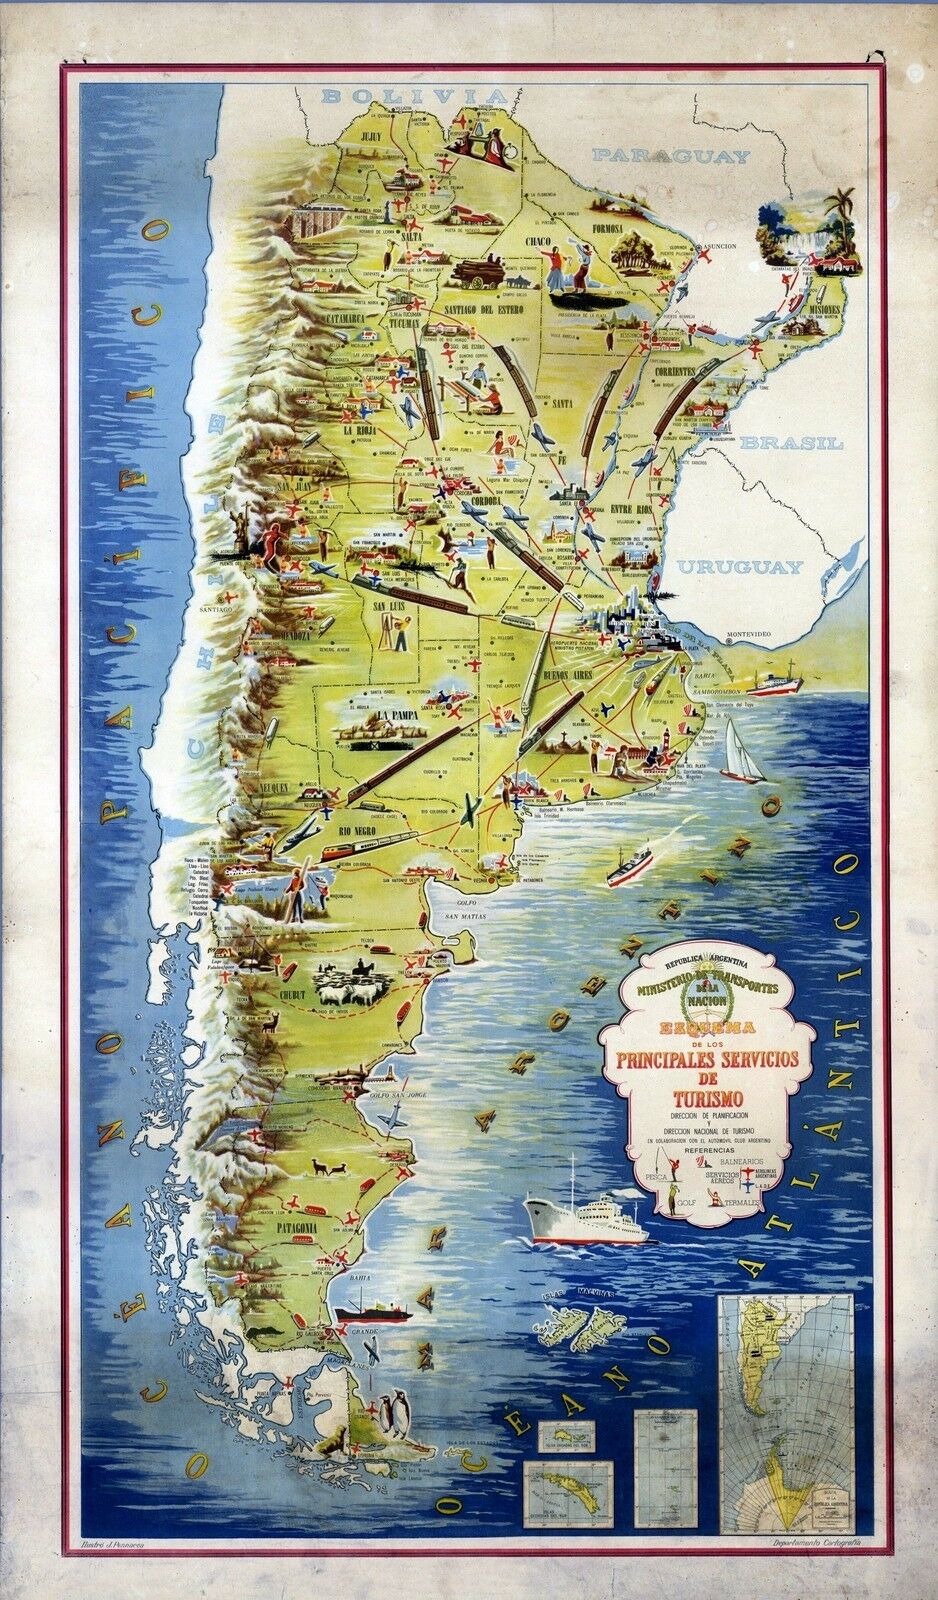 1946 Pictorial Map Argentina Tourist Cities Railroads Activities Poster 9946002